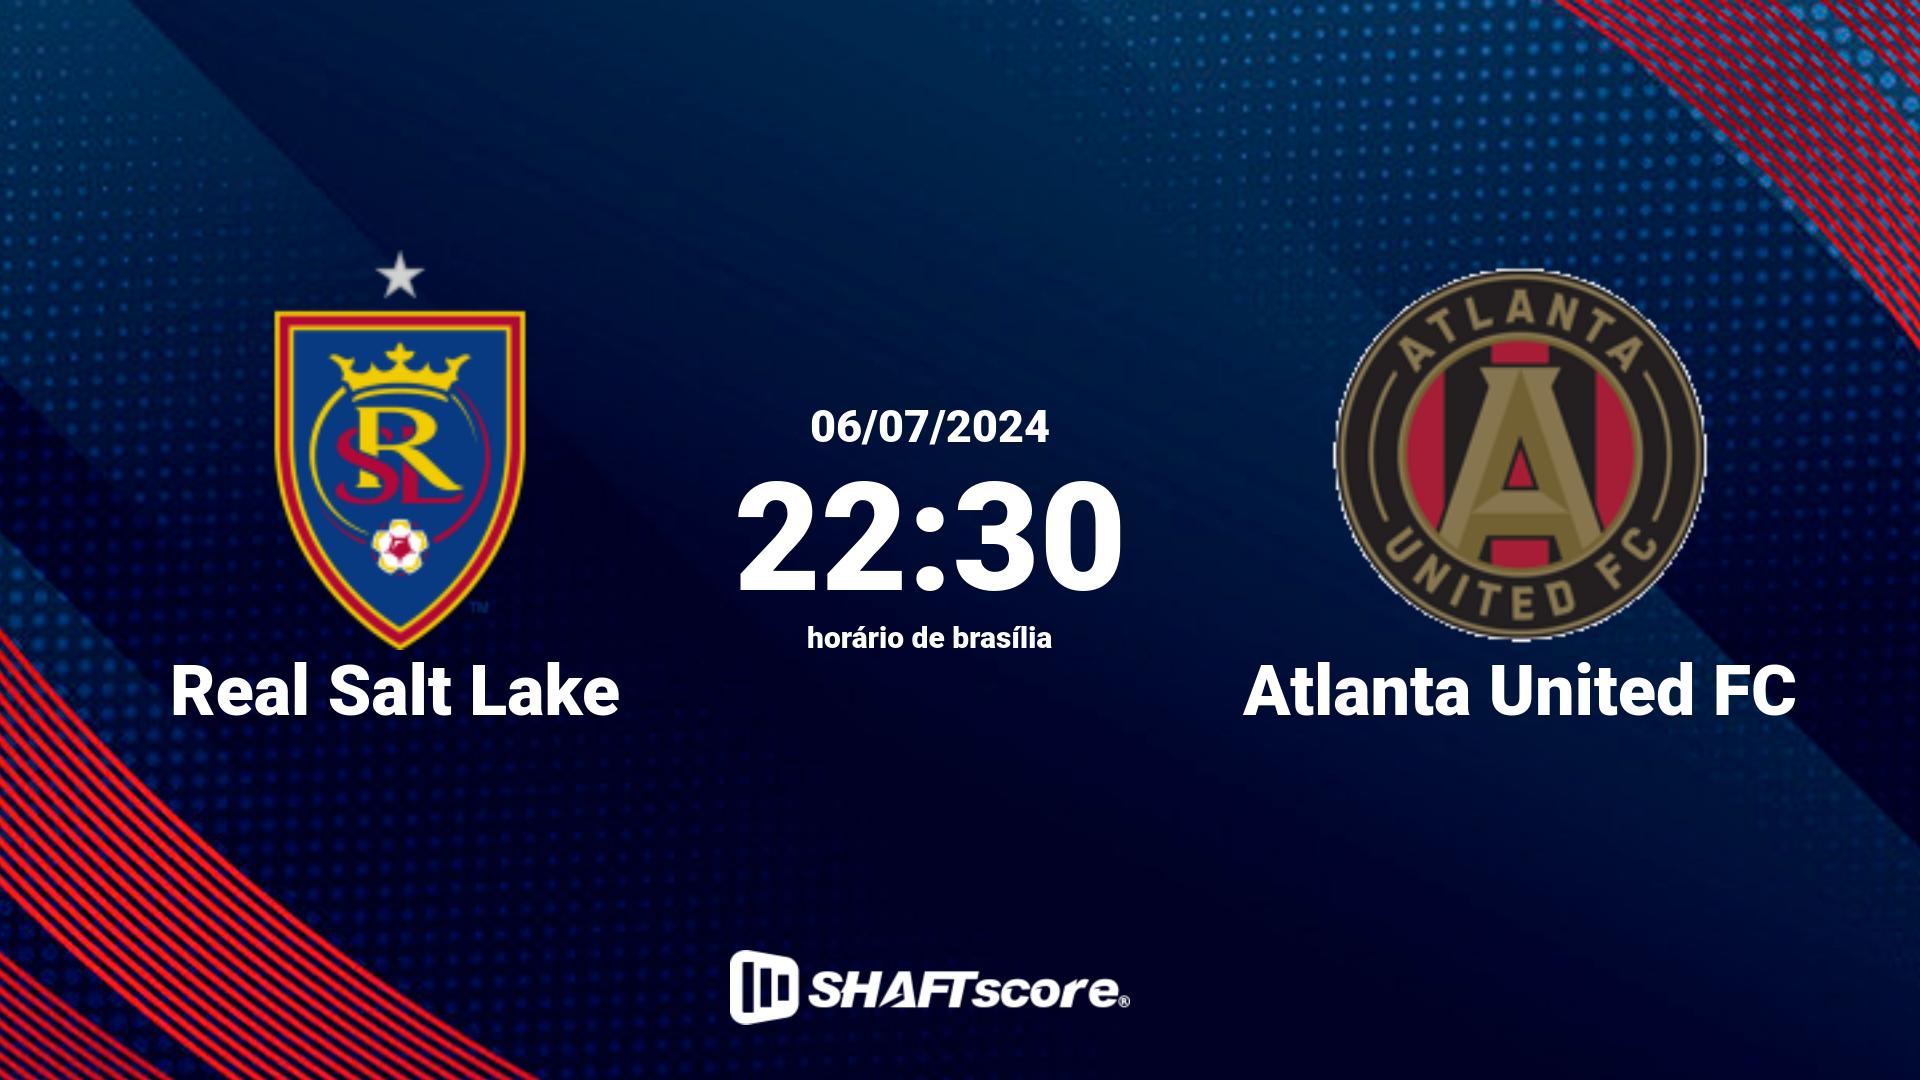 Estatísticas do jogo Real Salt Lake vs Atlanta United FC 06.07 22:30